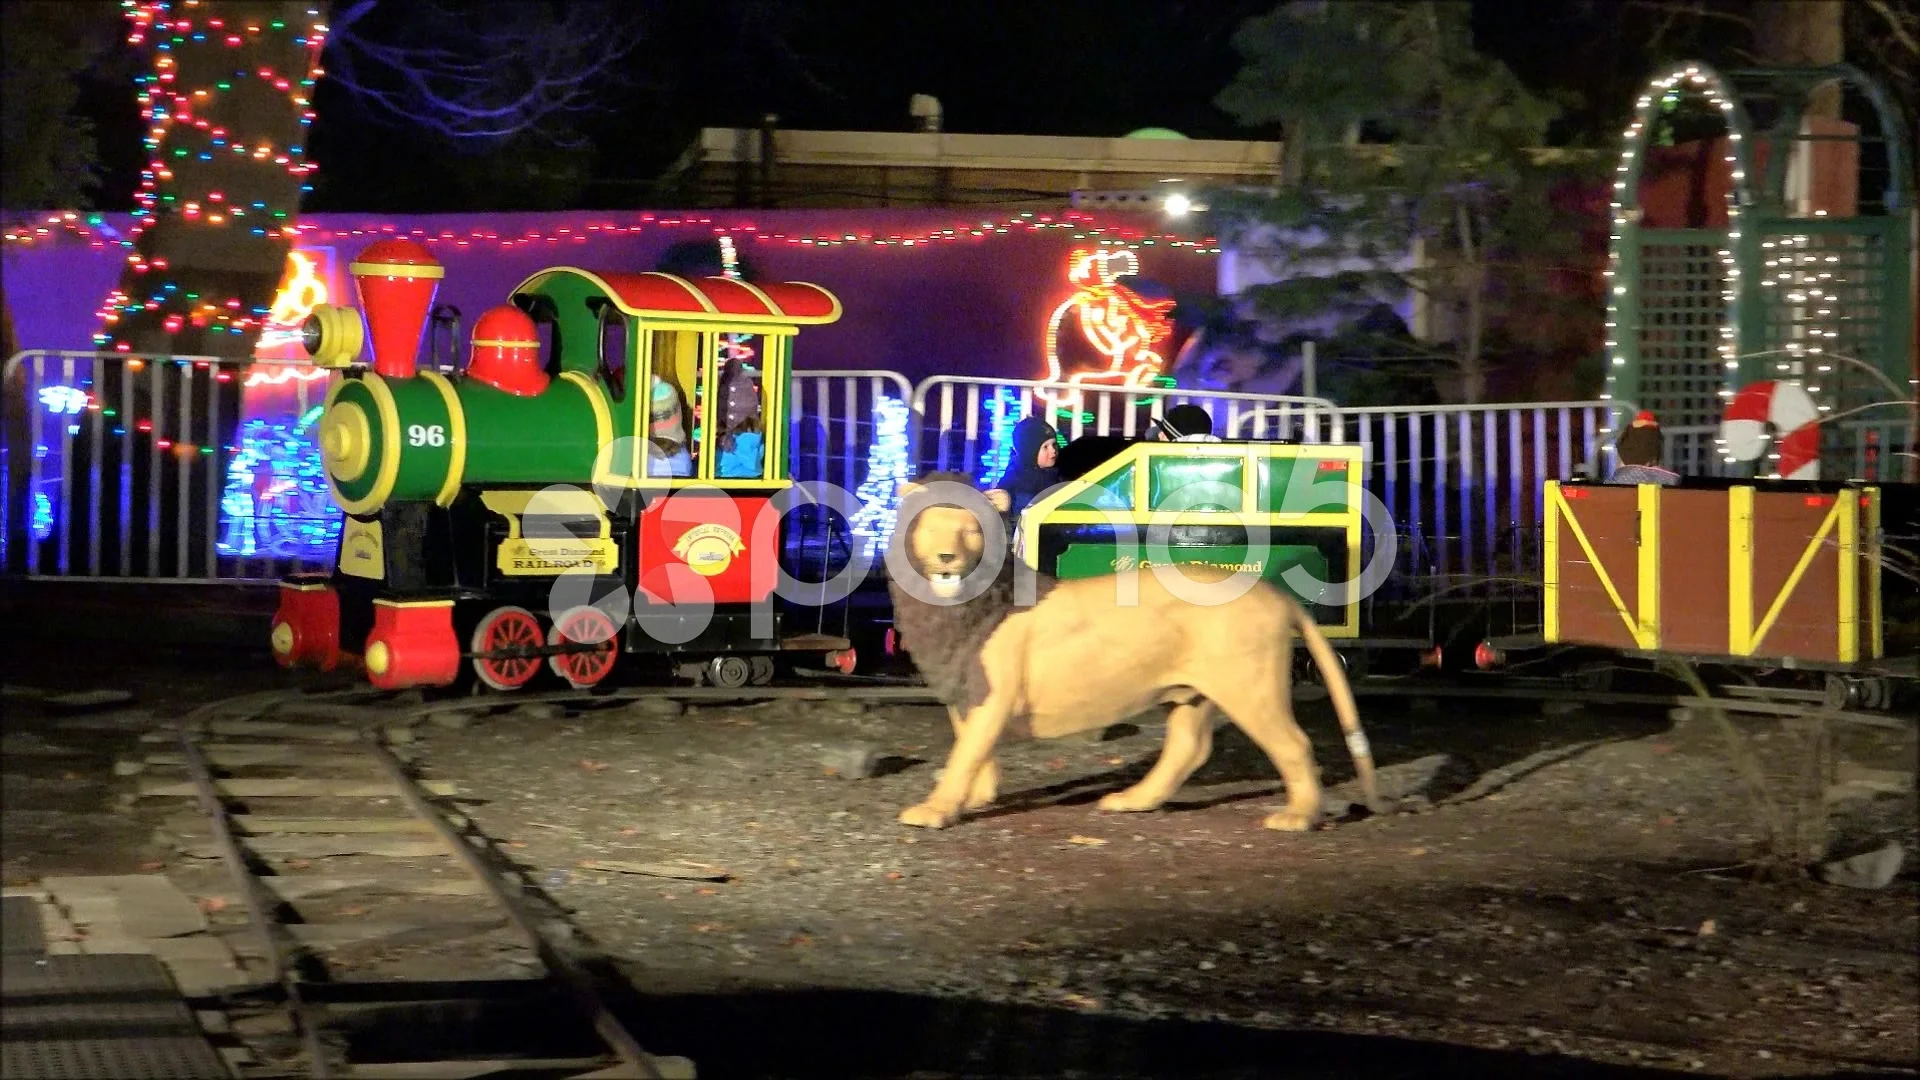 Christmas train ride for kids